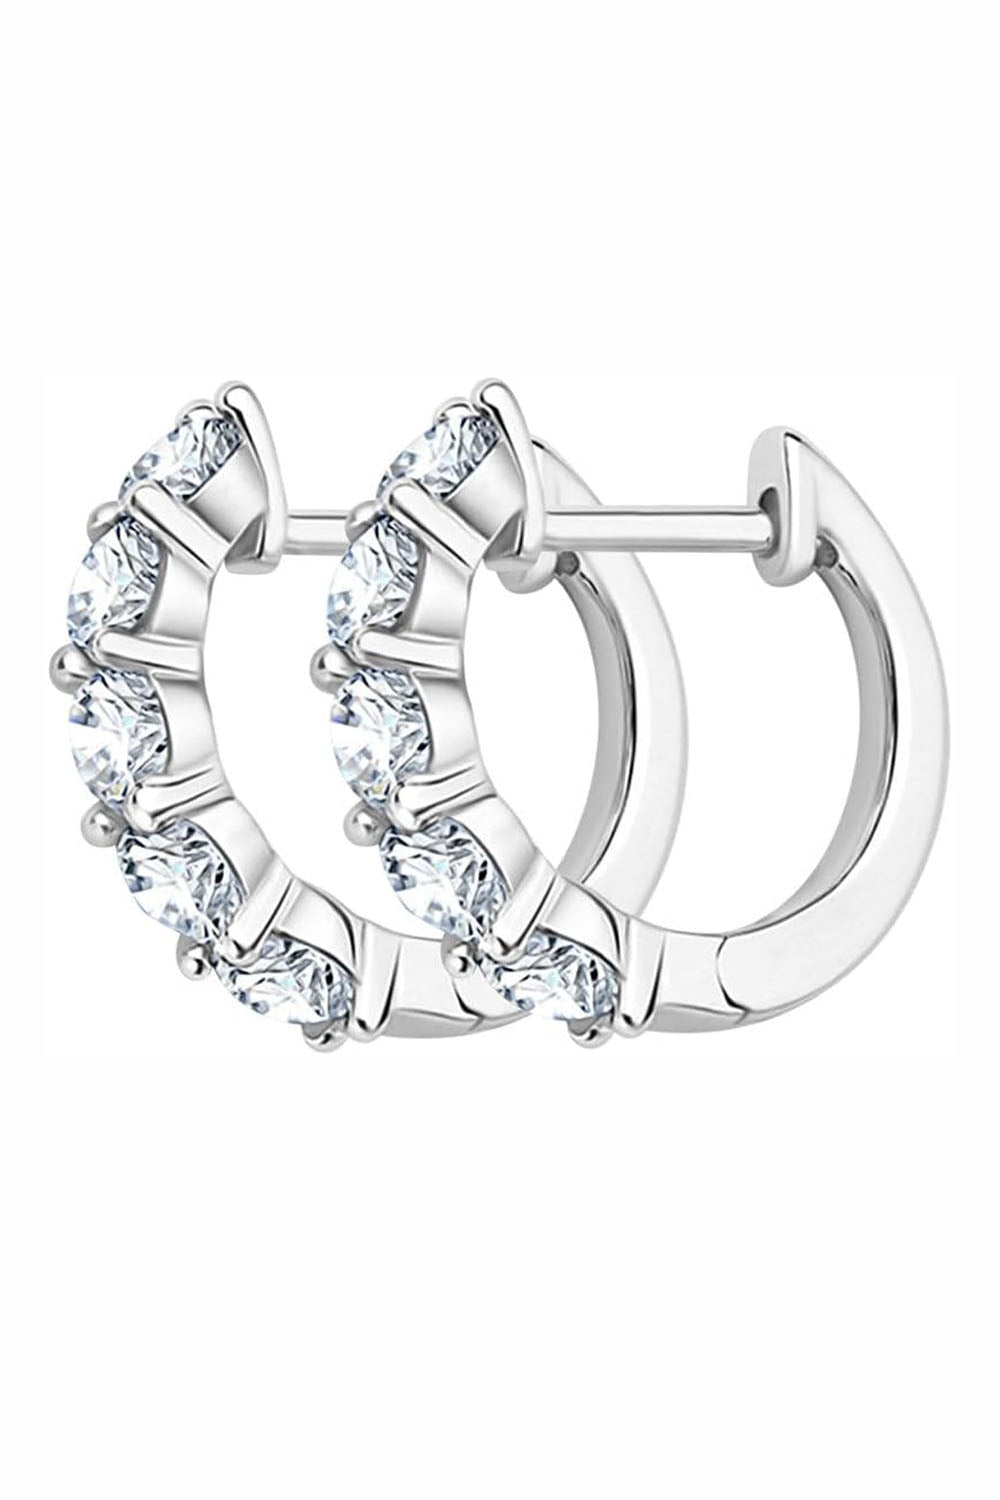 2 Carat Moissanite Diamond Hoop Earrings in 925 Sterling Silver 18K Gold Plated D Color VVS1.